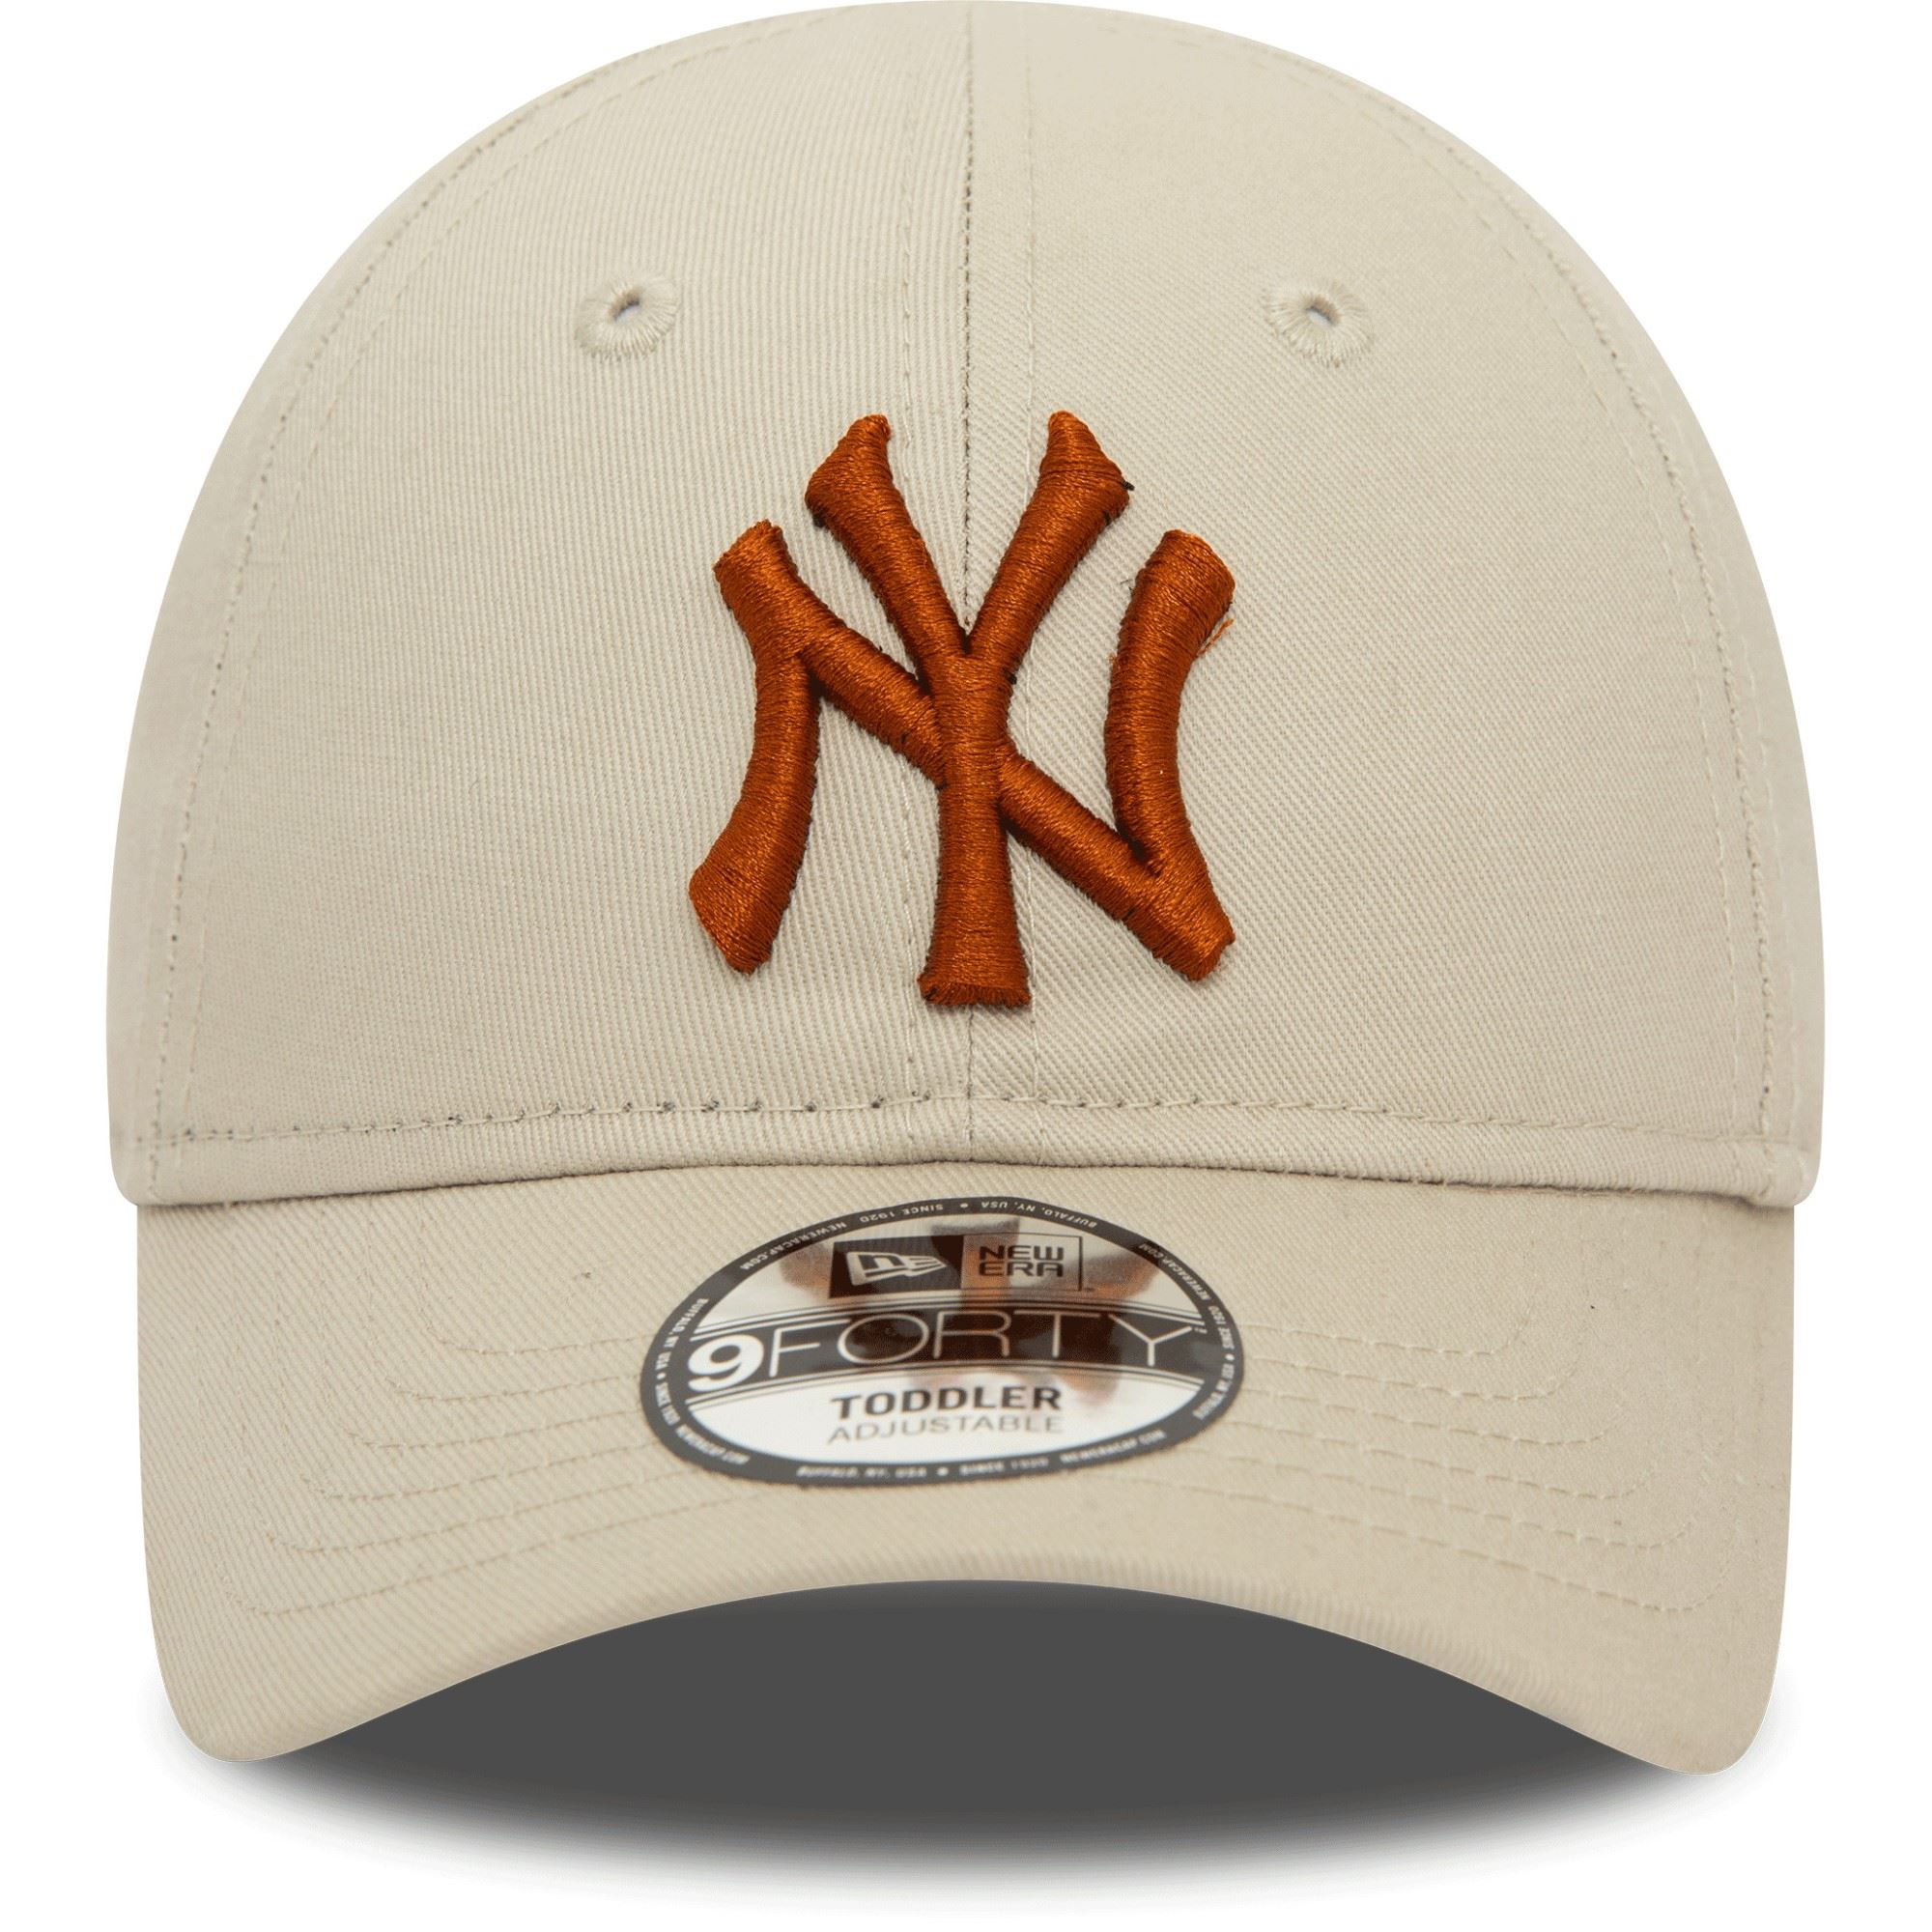 New York Yankees MLB League Essential Beige 9Forty Toddler Cap New Era